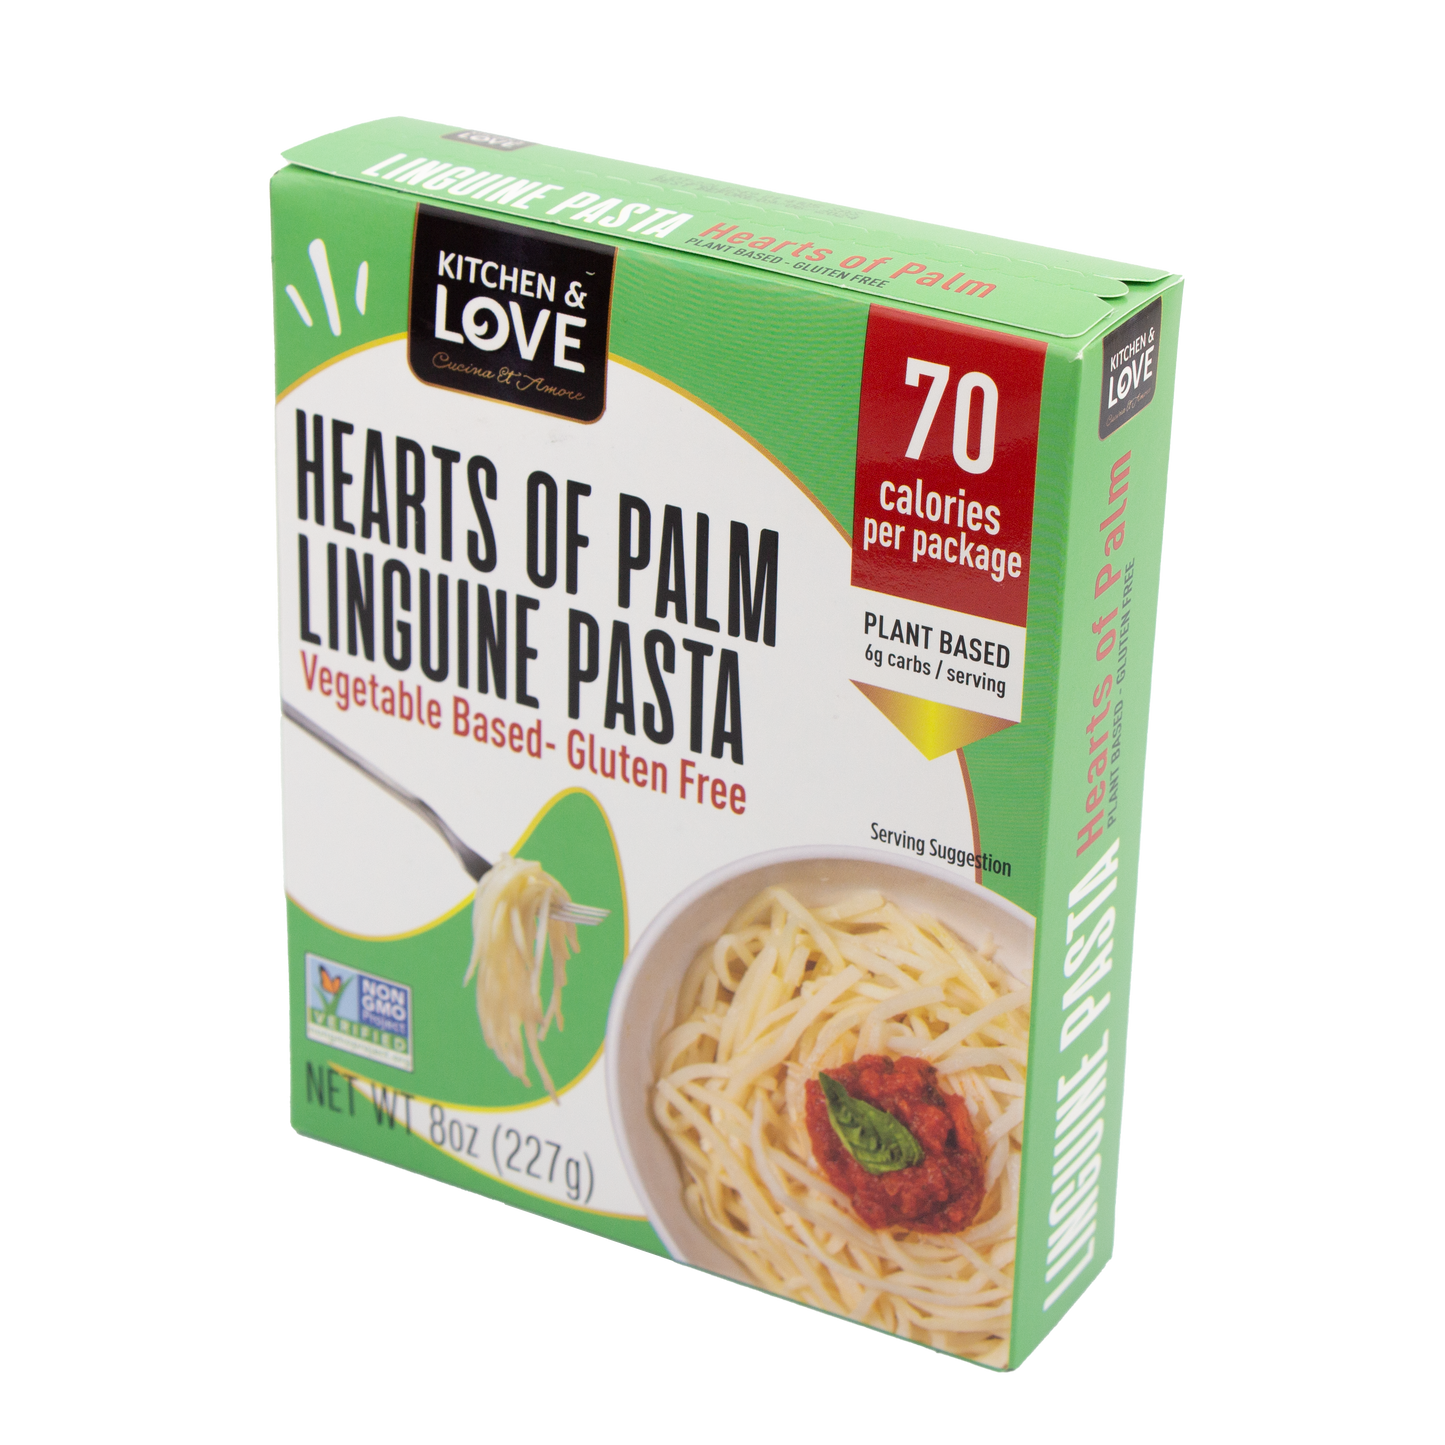 Kitchen & Love - Hearts of Palm Linguine Pasta